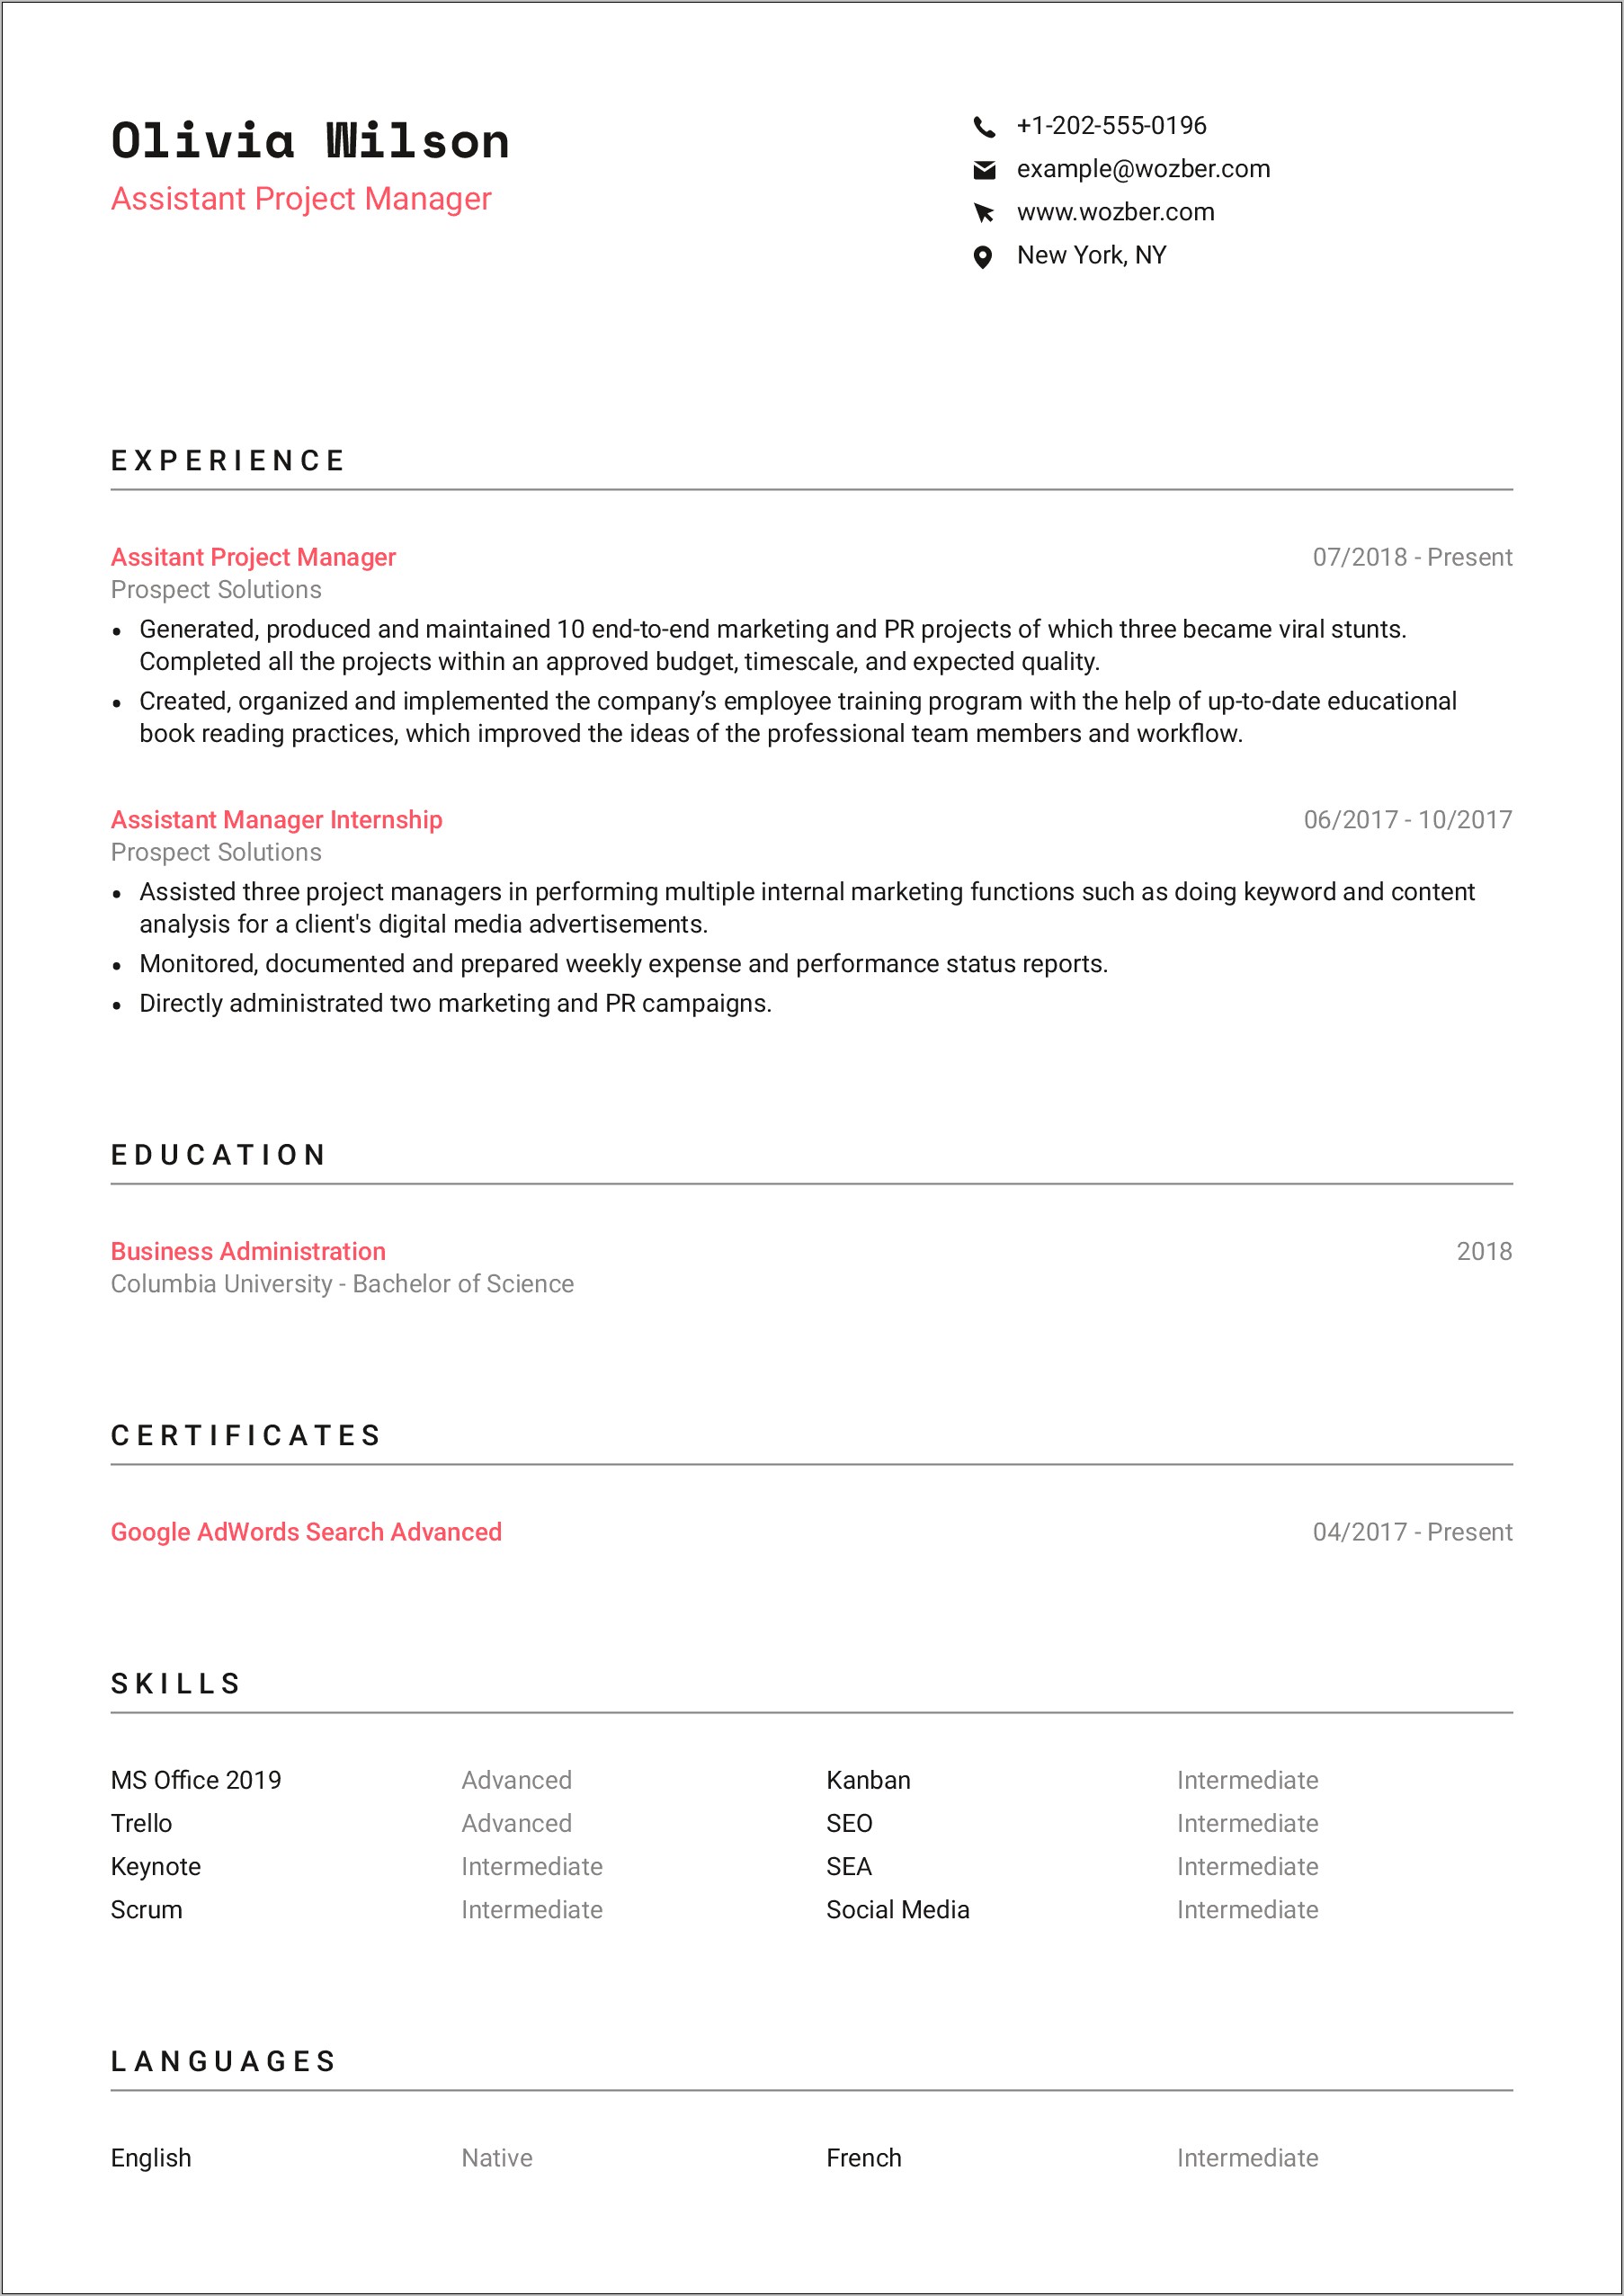 Budget Web Apllication Description On Resume